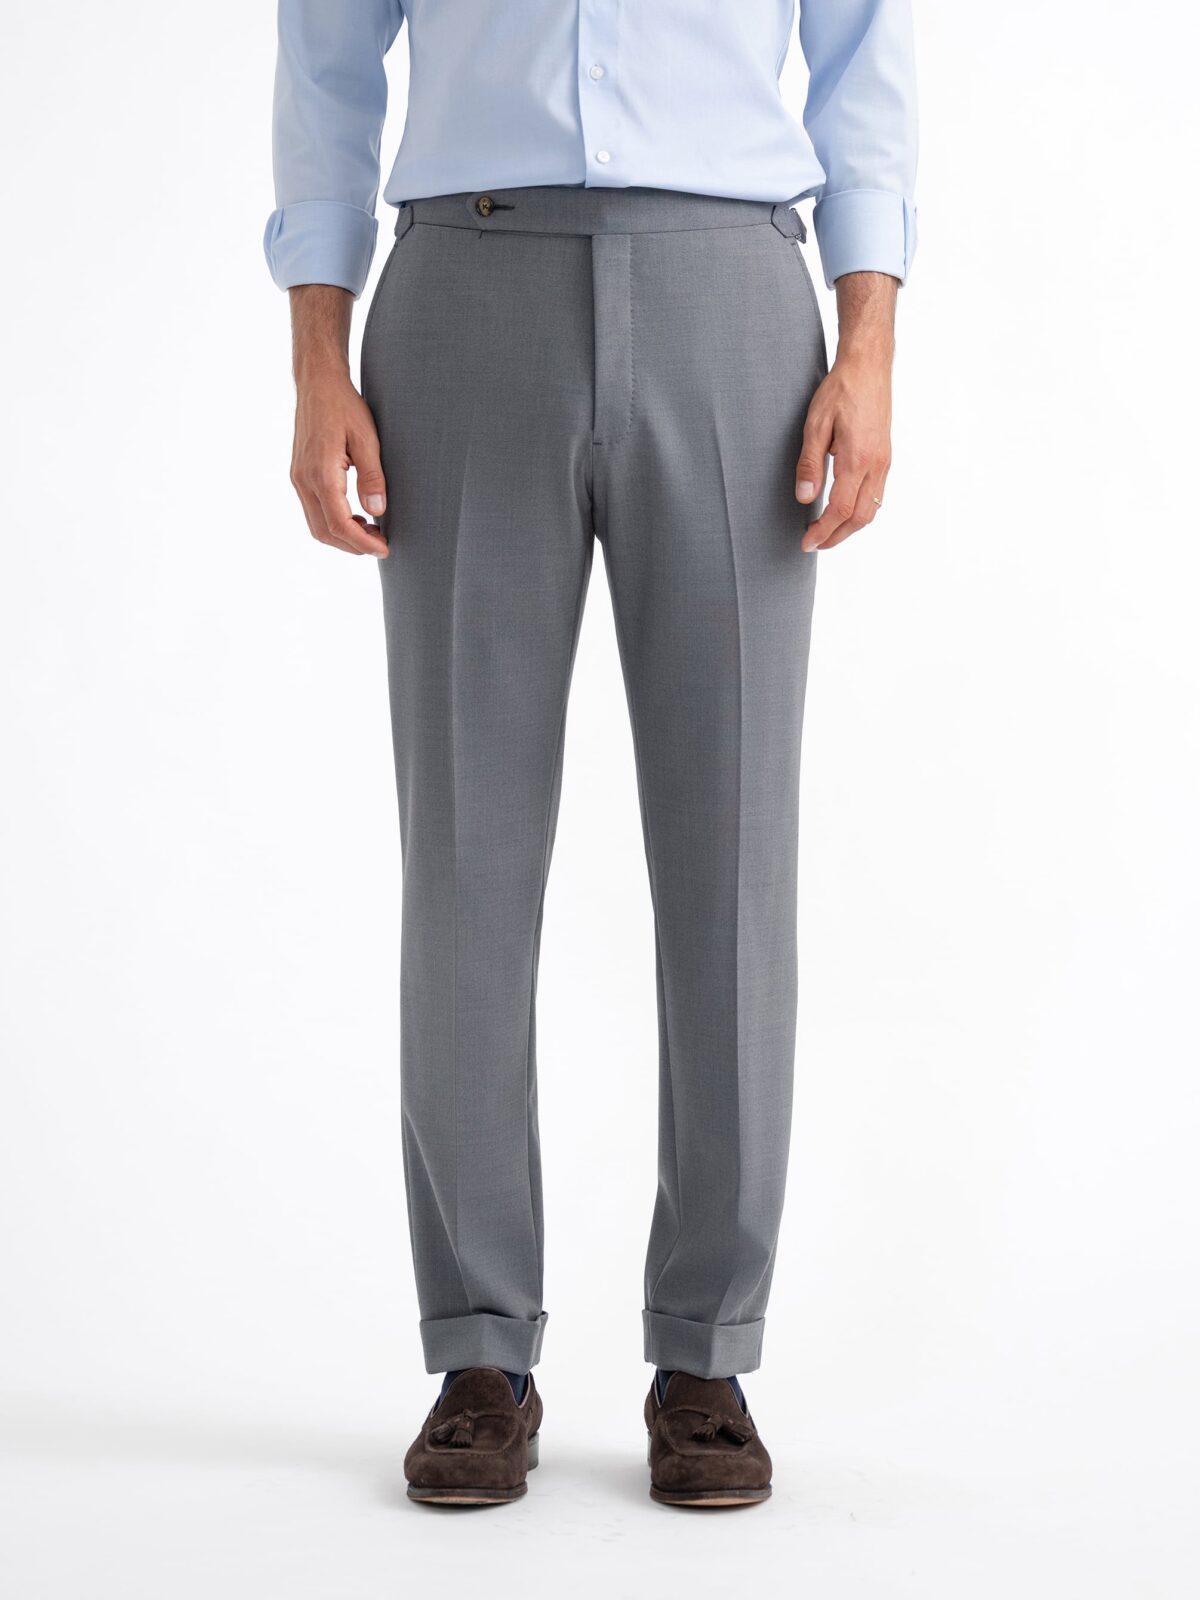 Faded Glory Gray Dress Pants Size 2X (Plus) - 37% off